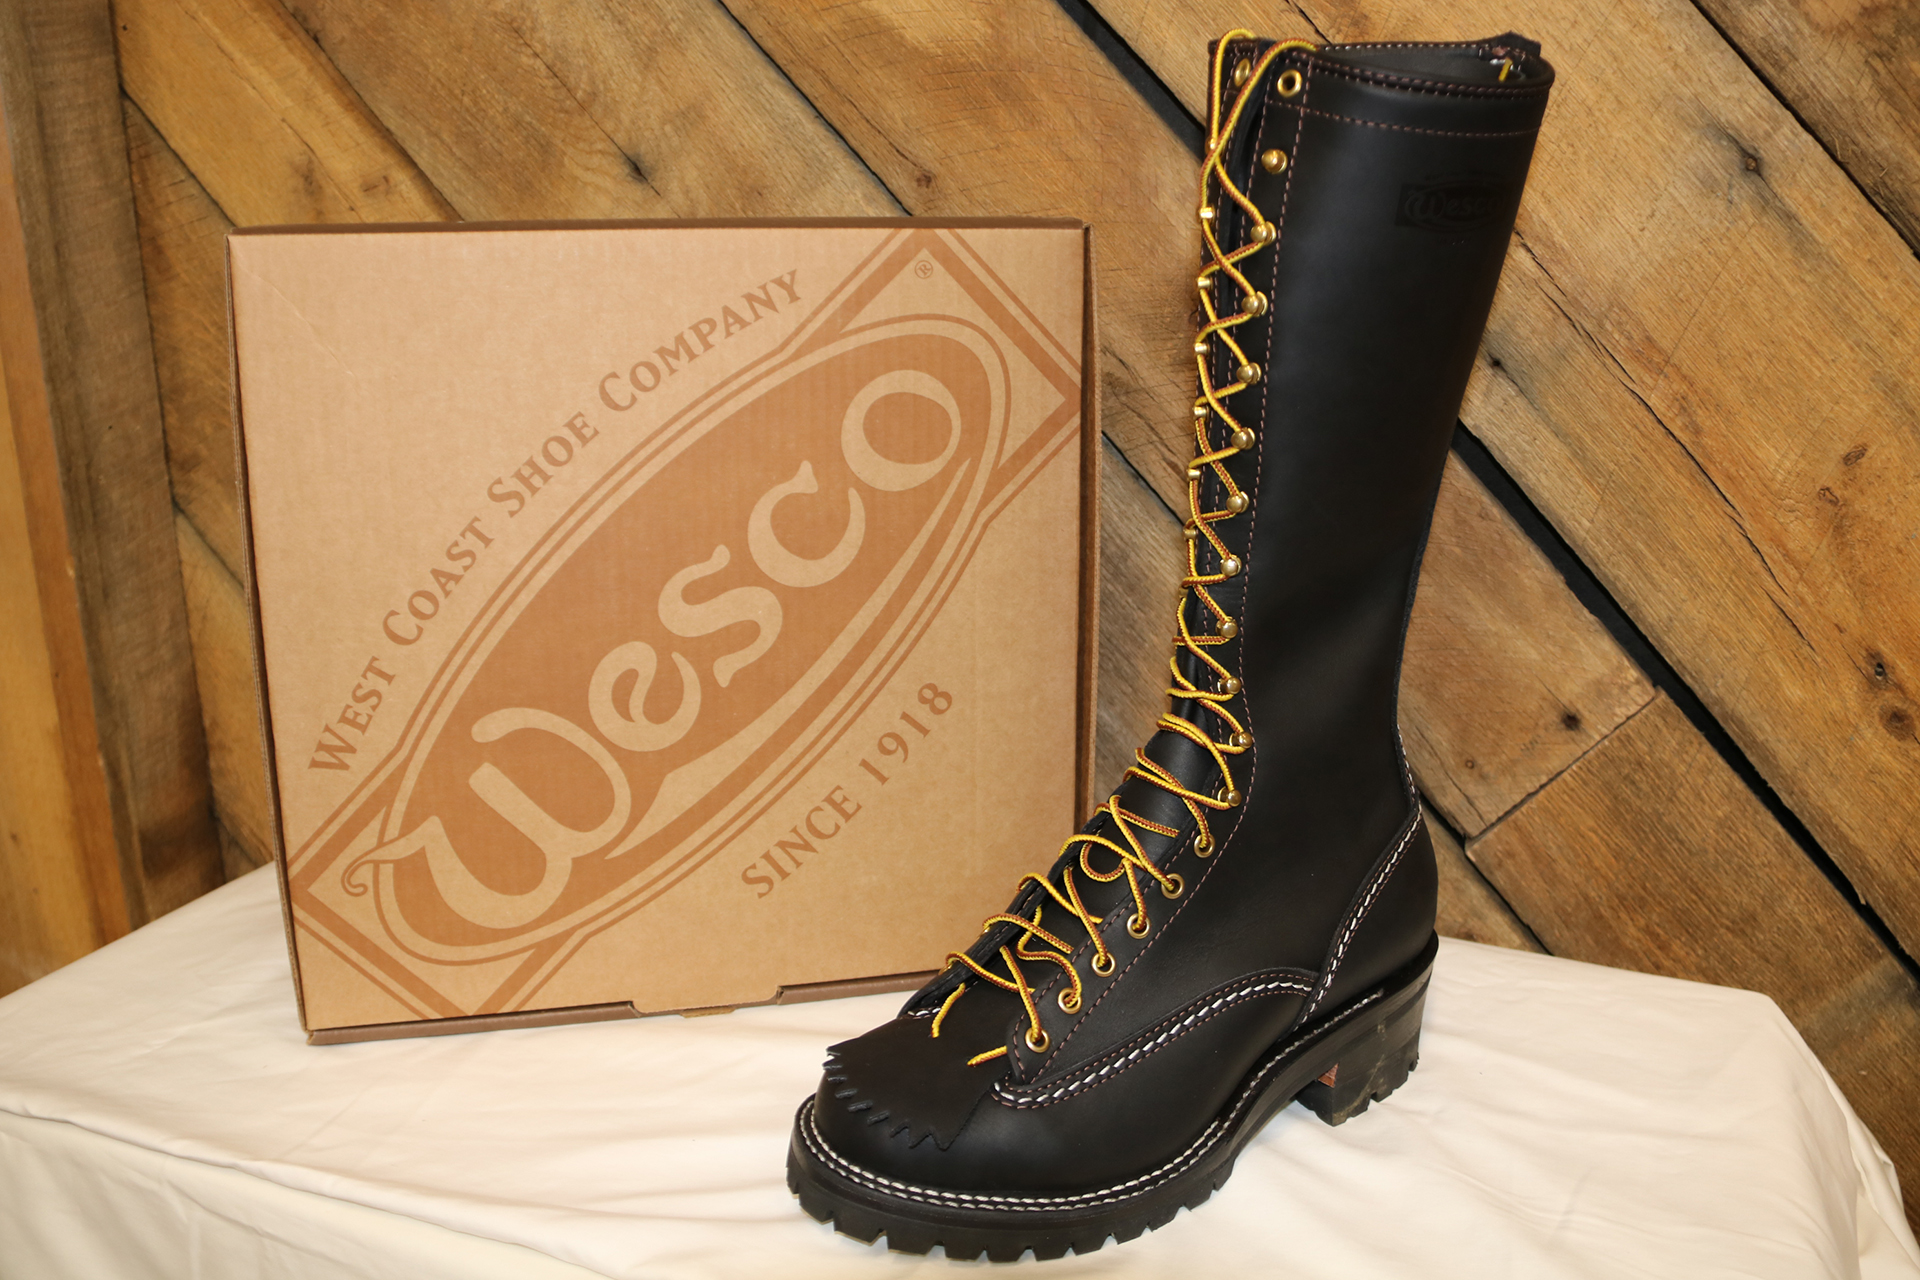 Wesco Boots for Men